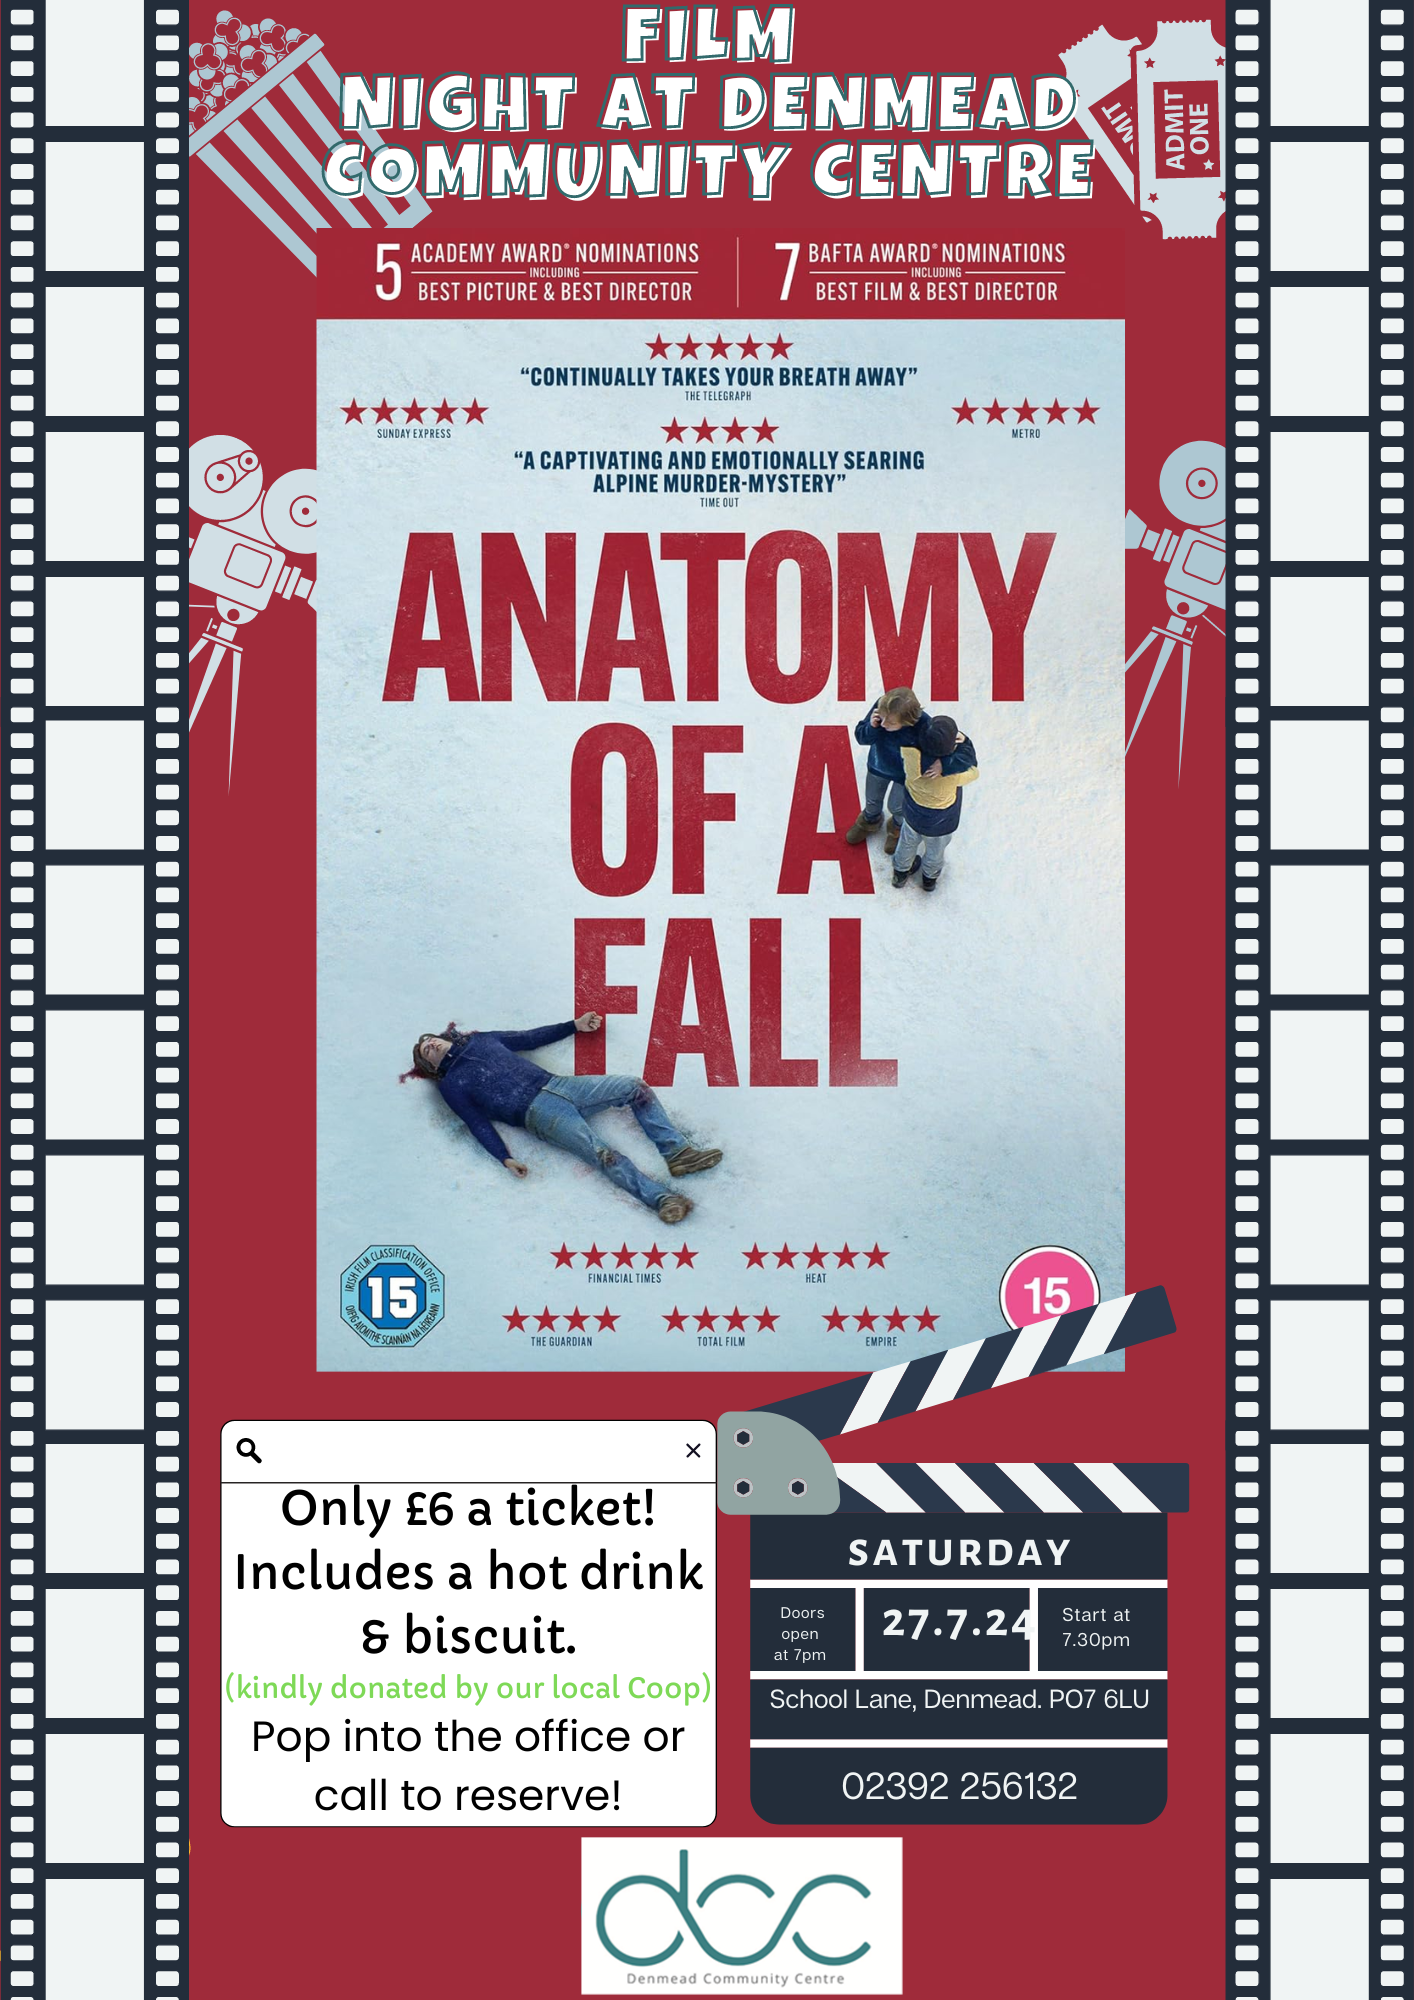 Film Night - Anatomy of a Fall